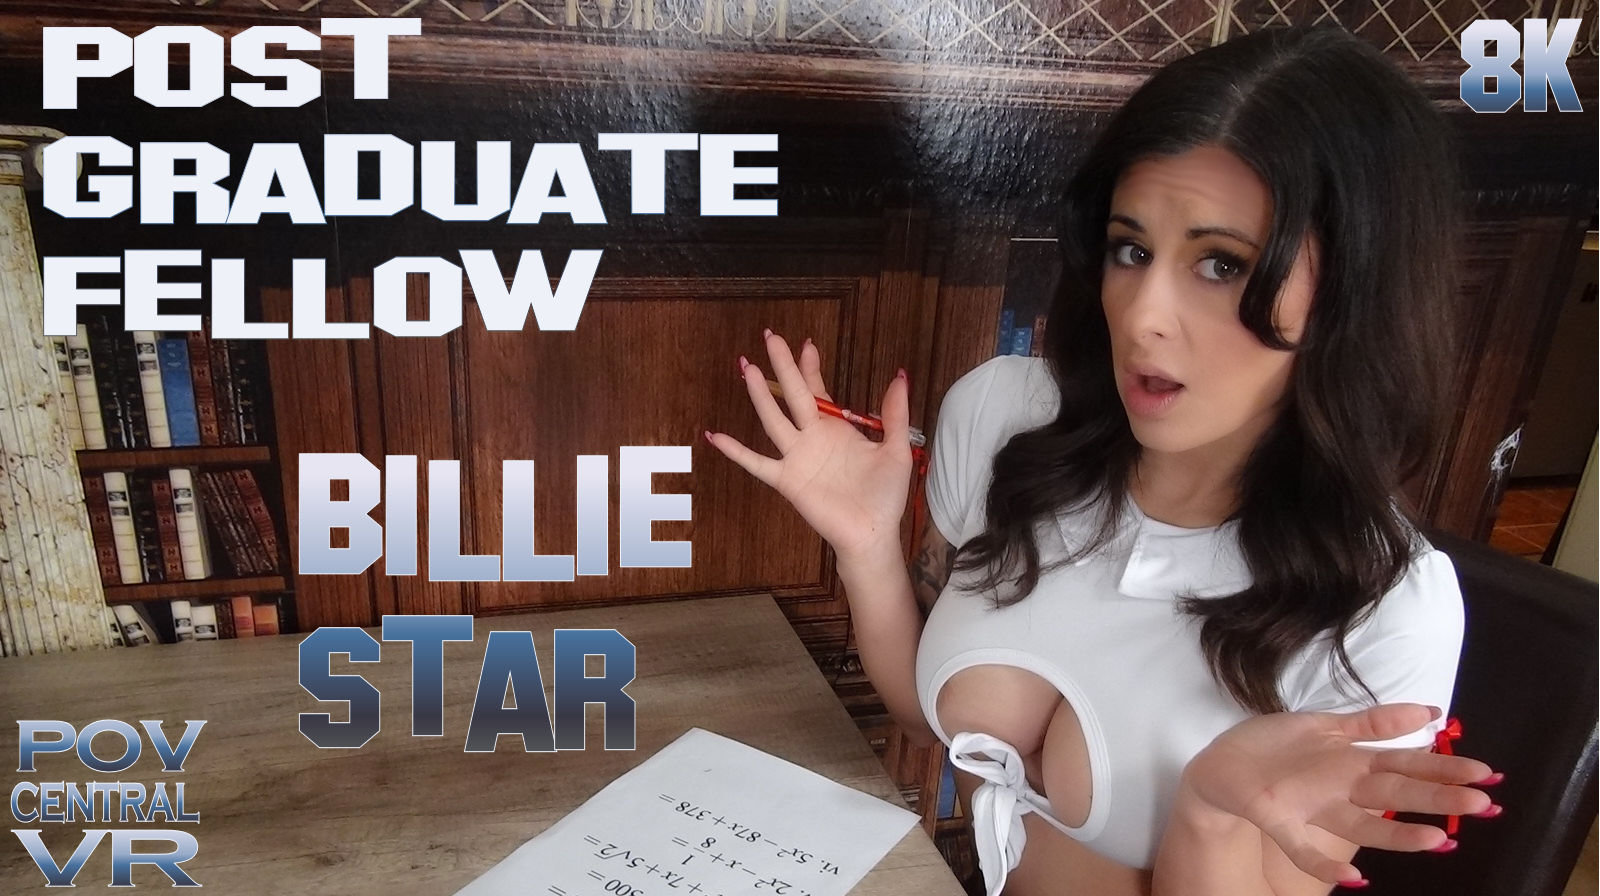 Post Graduate Fellow - Billie Star